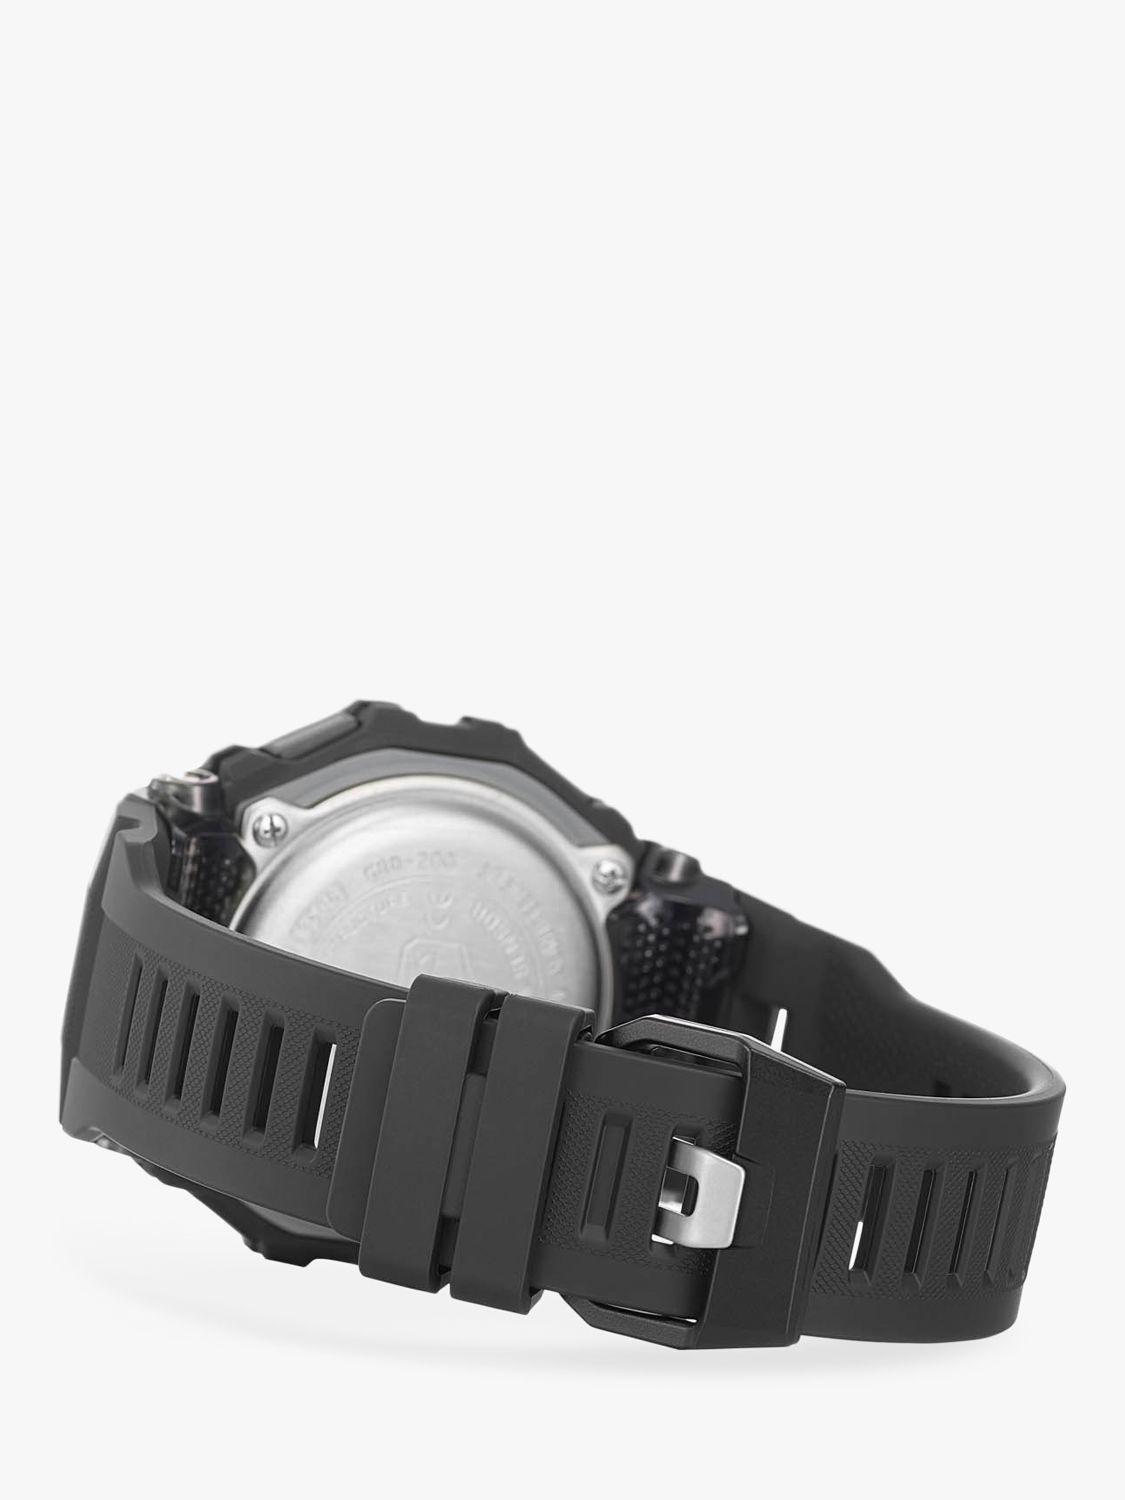 Casio Men's G-Shock Steptracker Resin Strap Watch, Black GBD-200-1ER